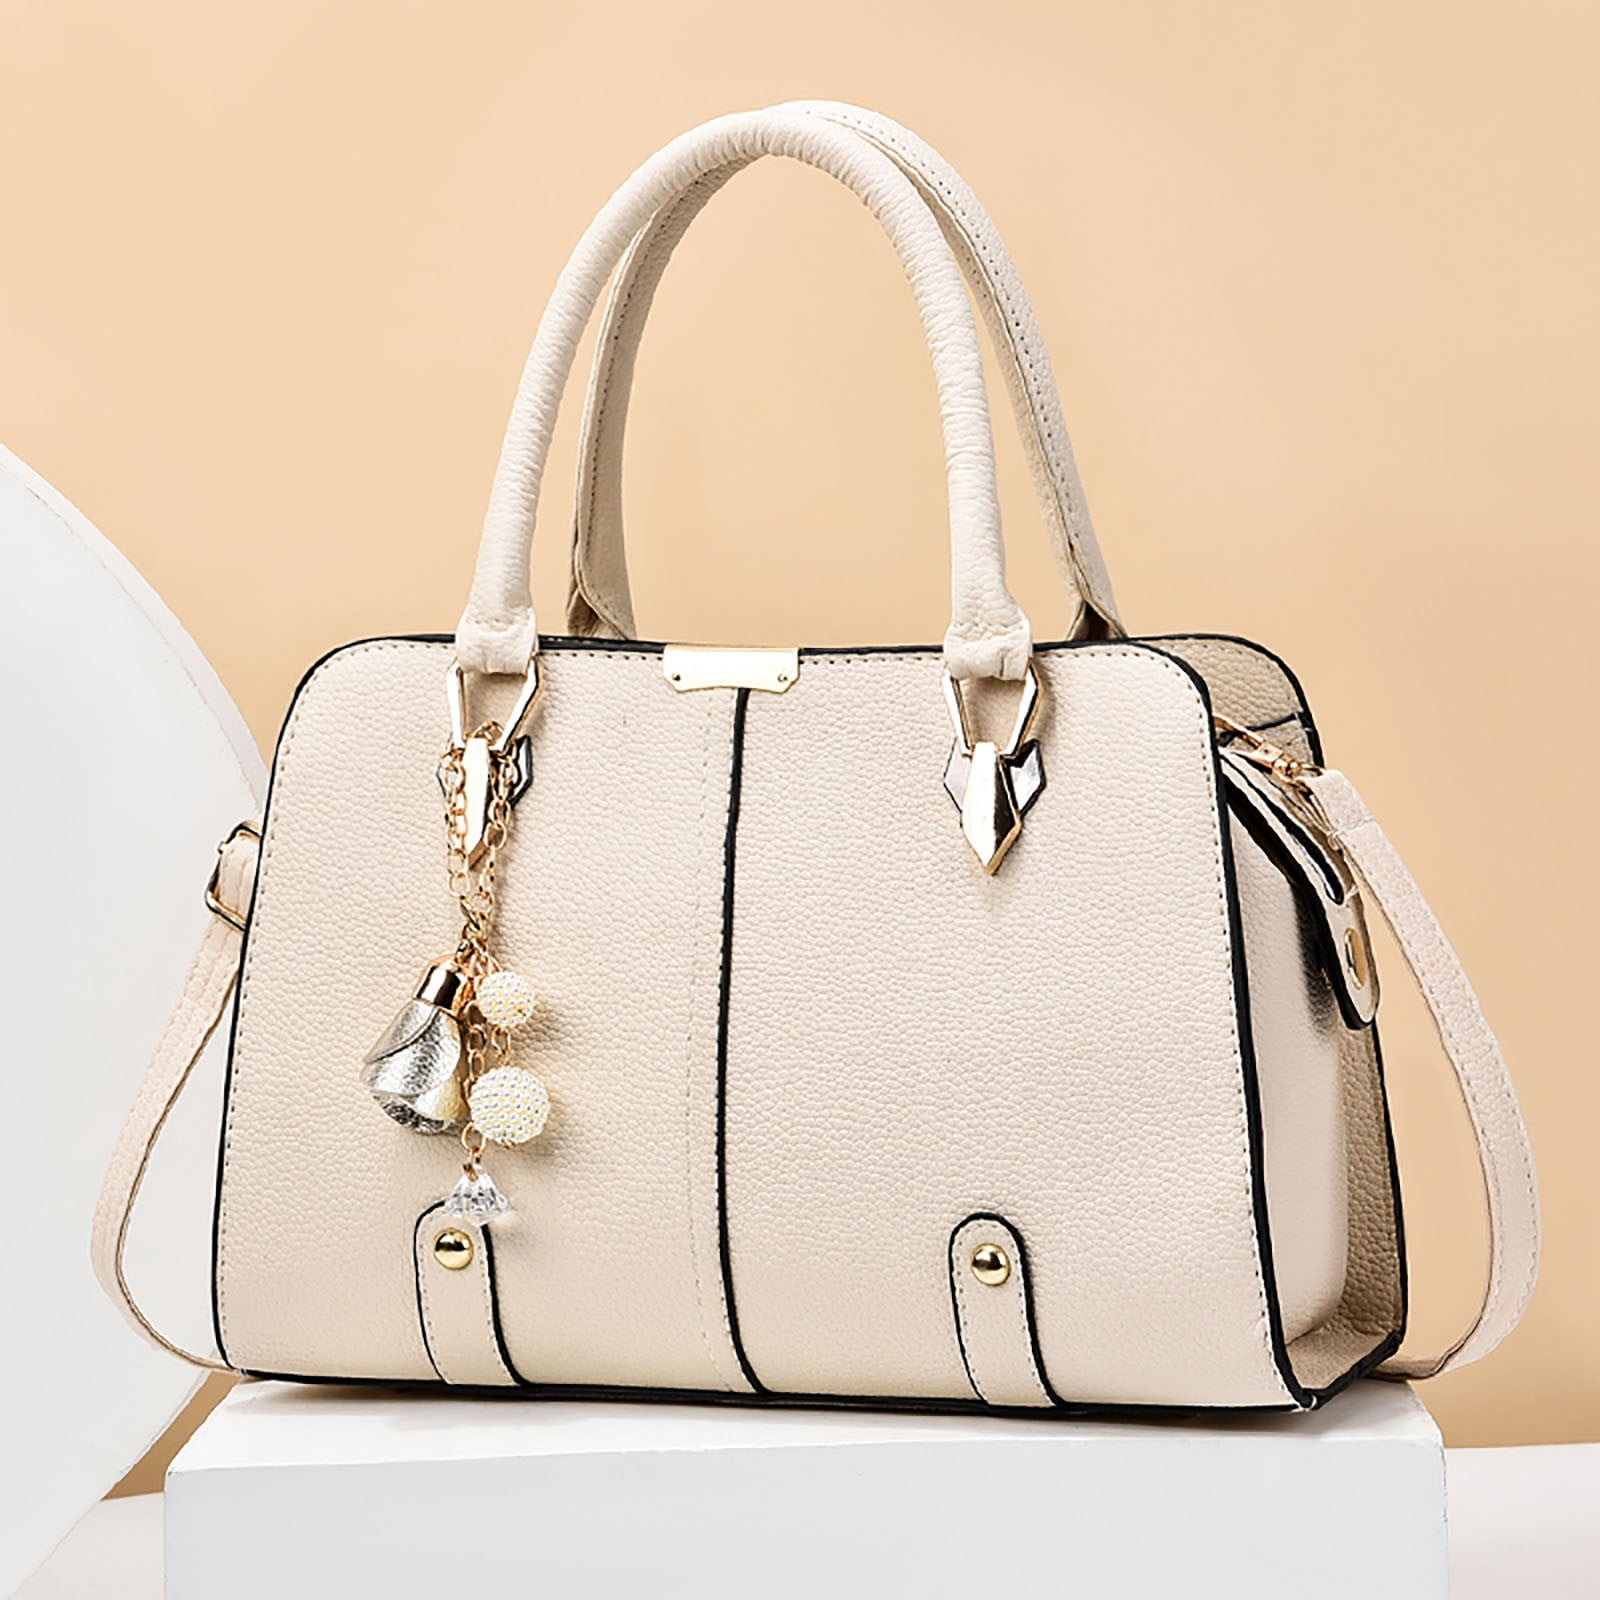 CLUCI Handbags for Women Leather Tote Shoulder Bag Big Capacity Fashio